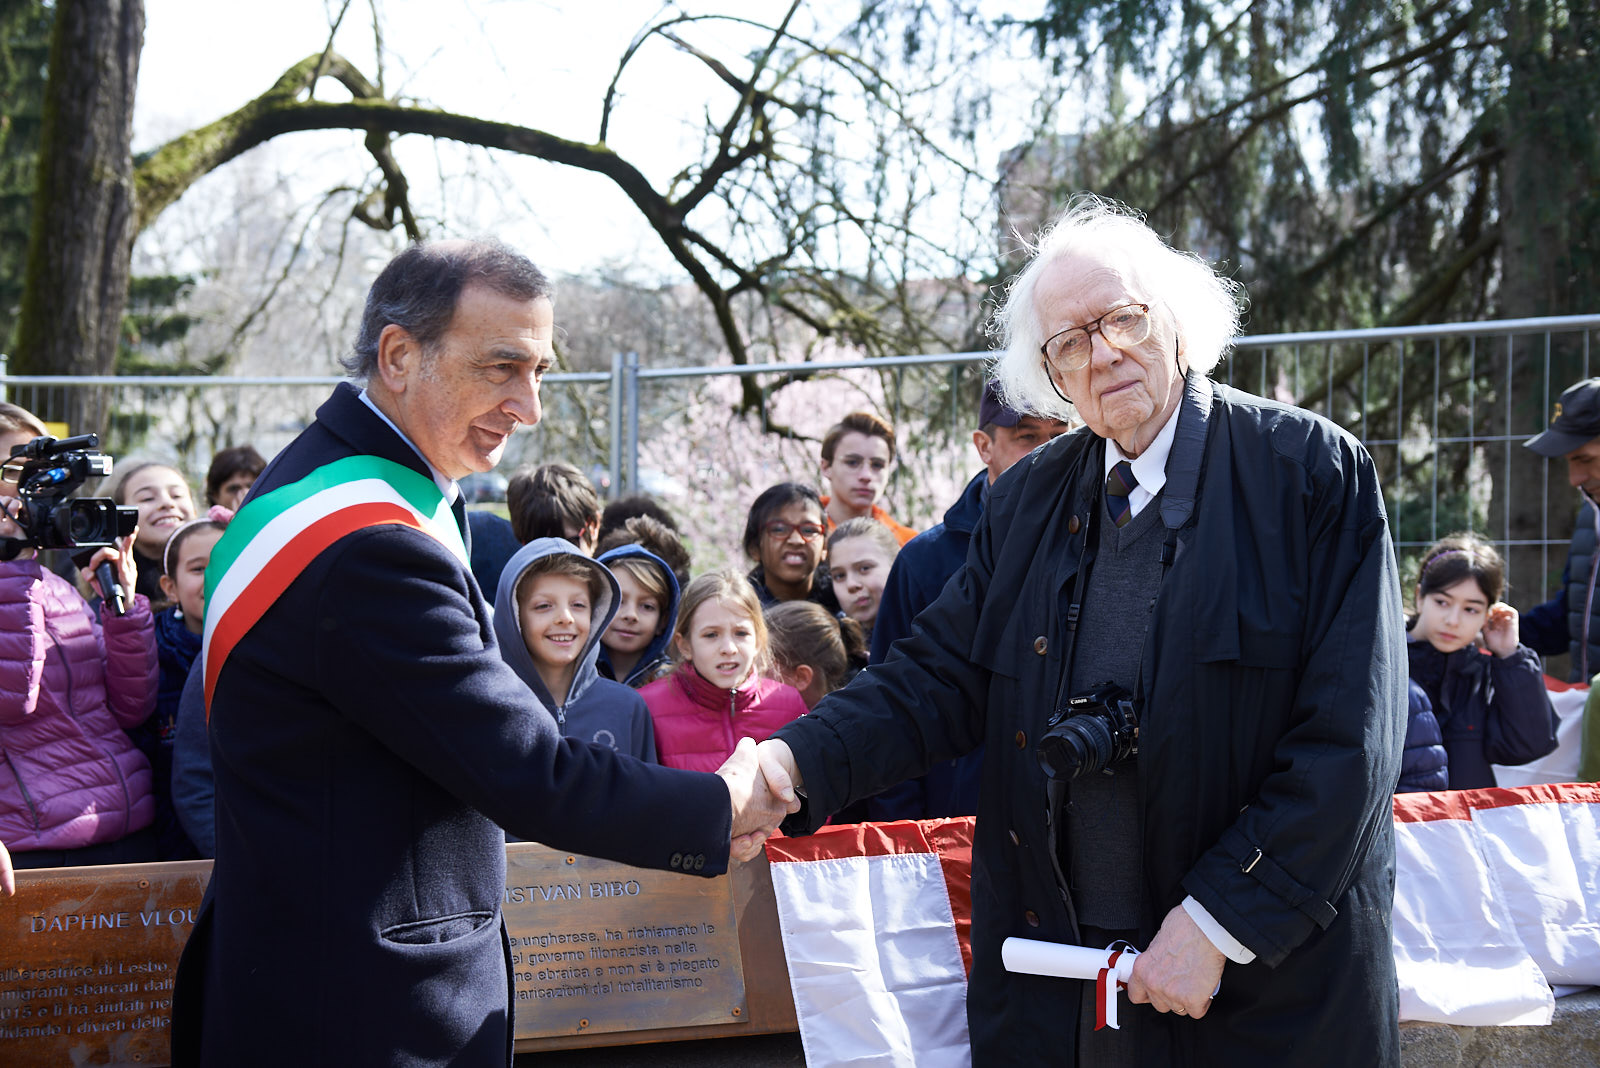 Istvan Bibo with Giuseppe Sala discovering the plaque dedicated to Bibo